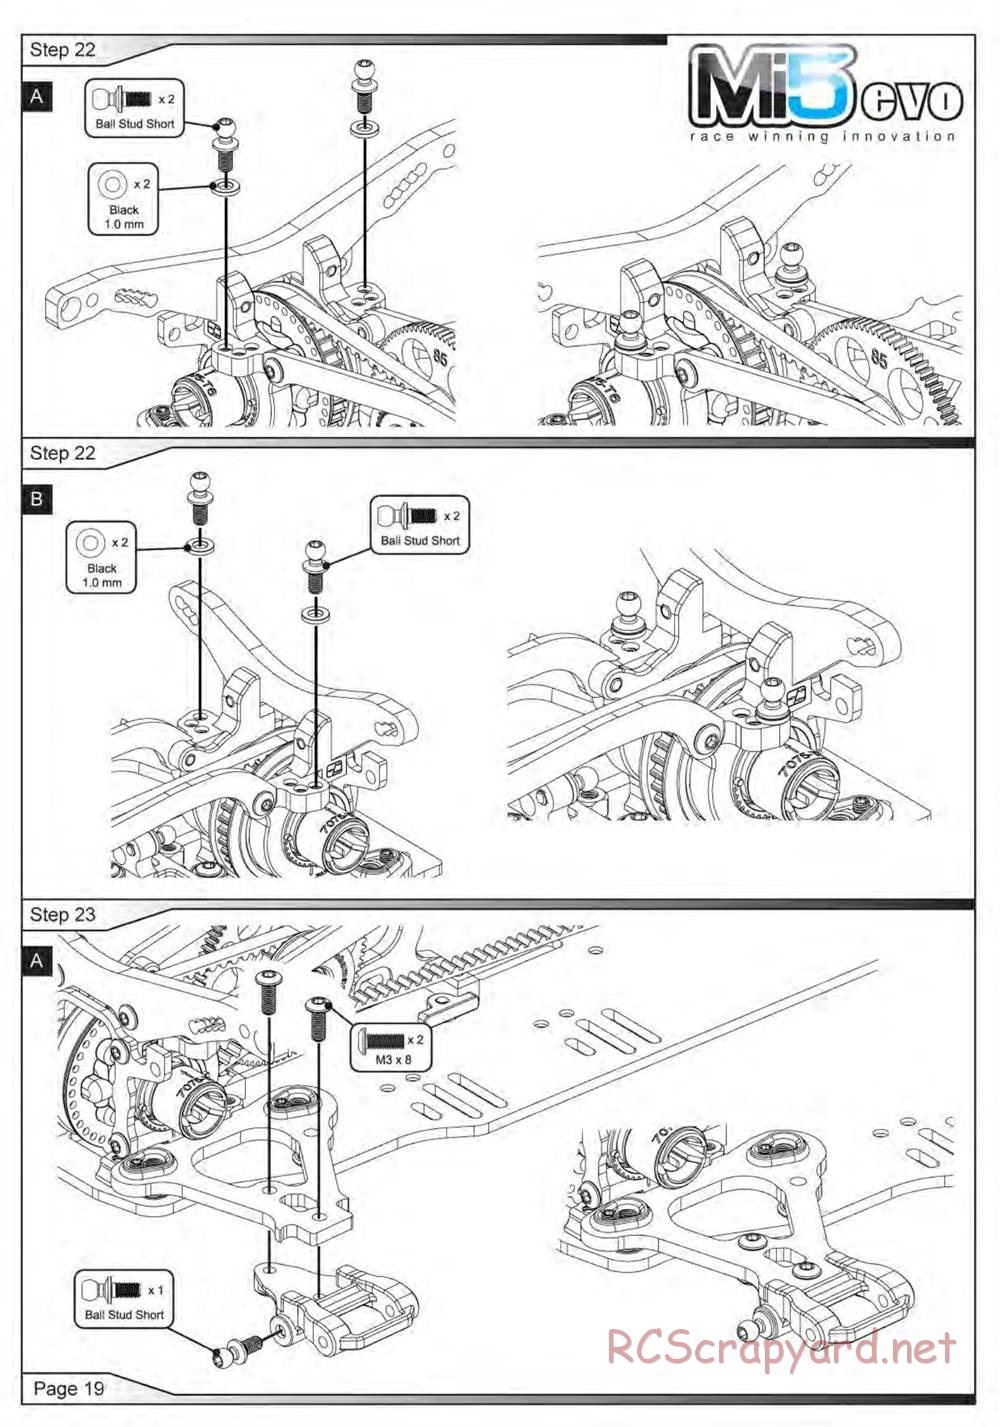 Schumacher - Mi5 Evo - Manual - Page 20